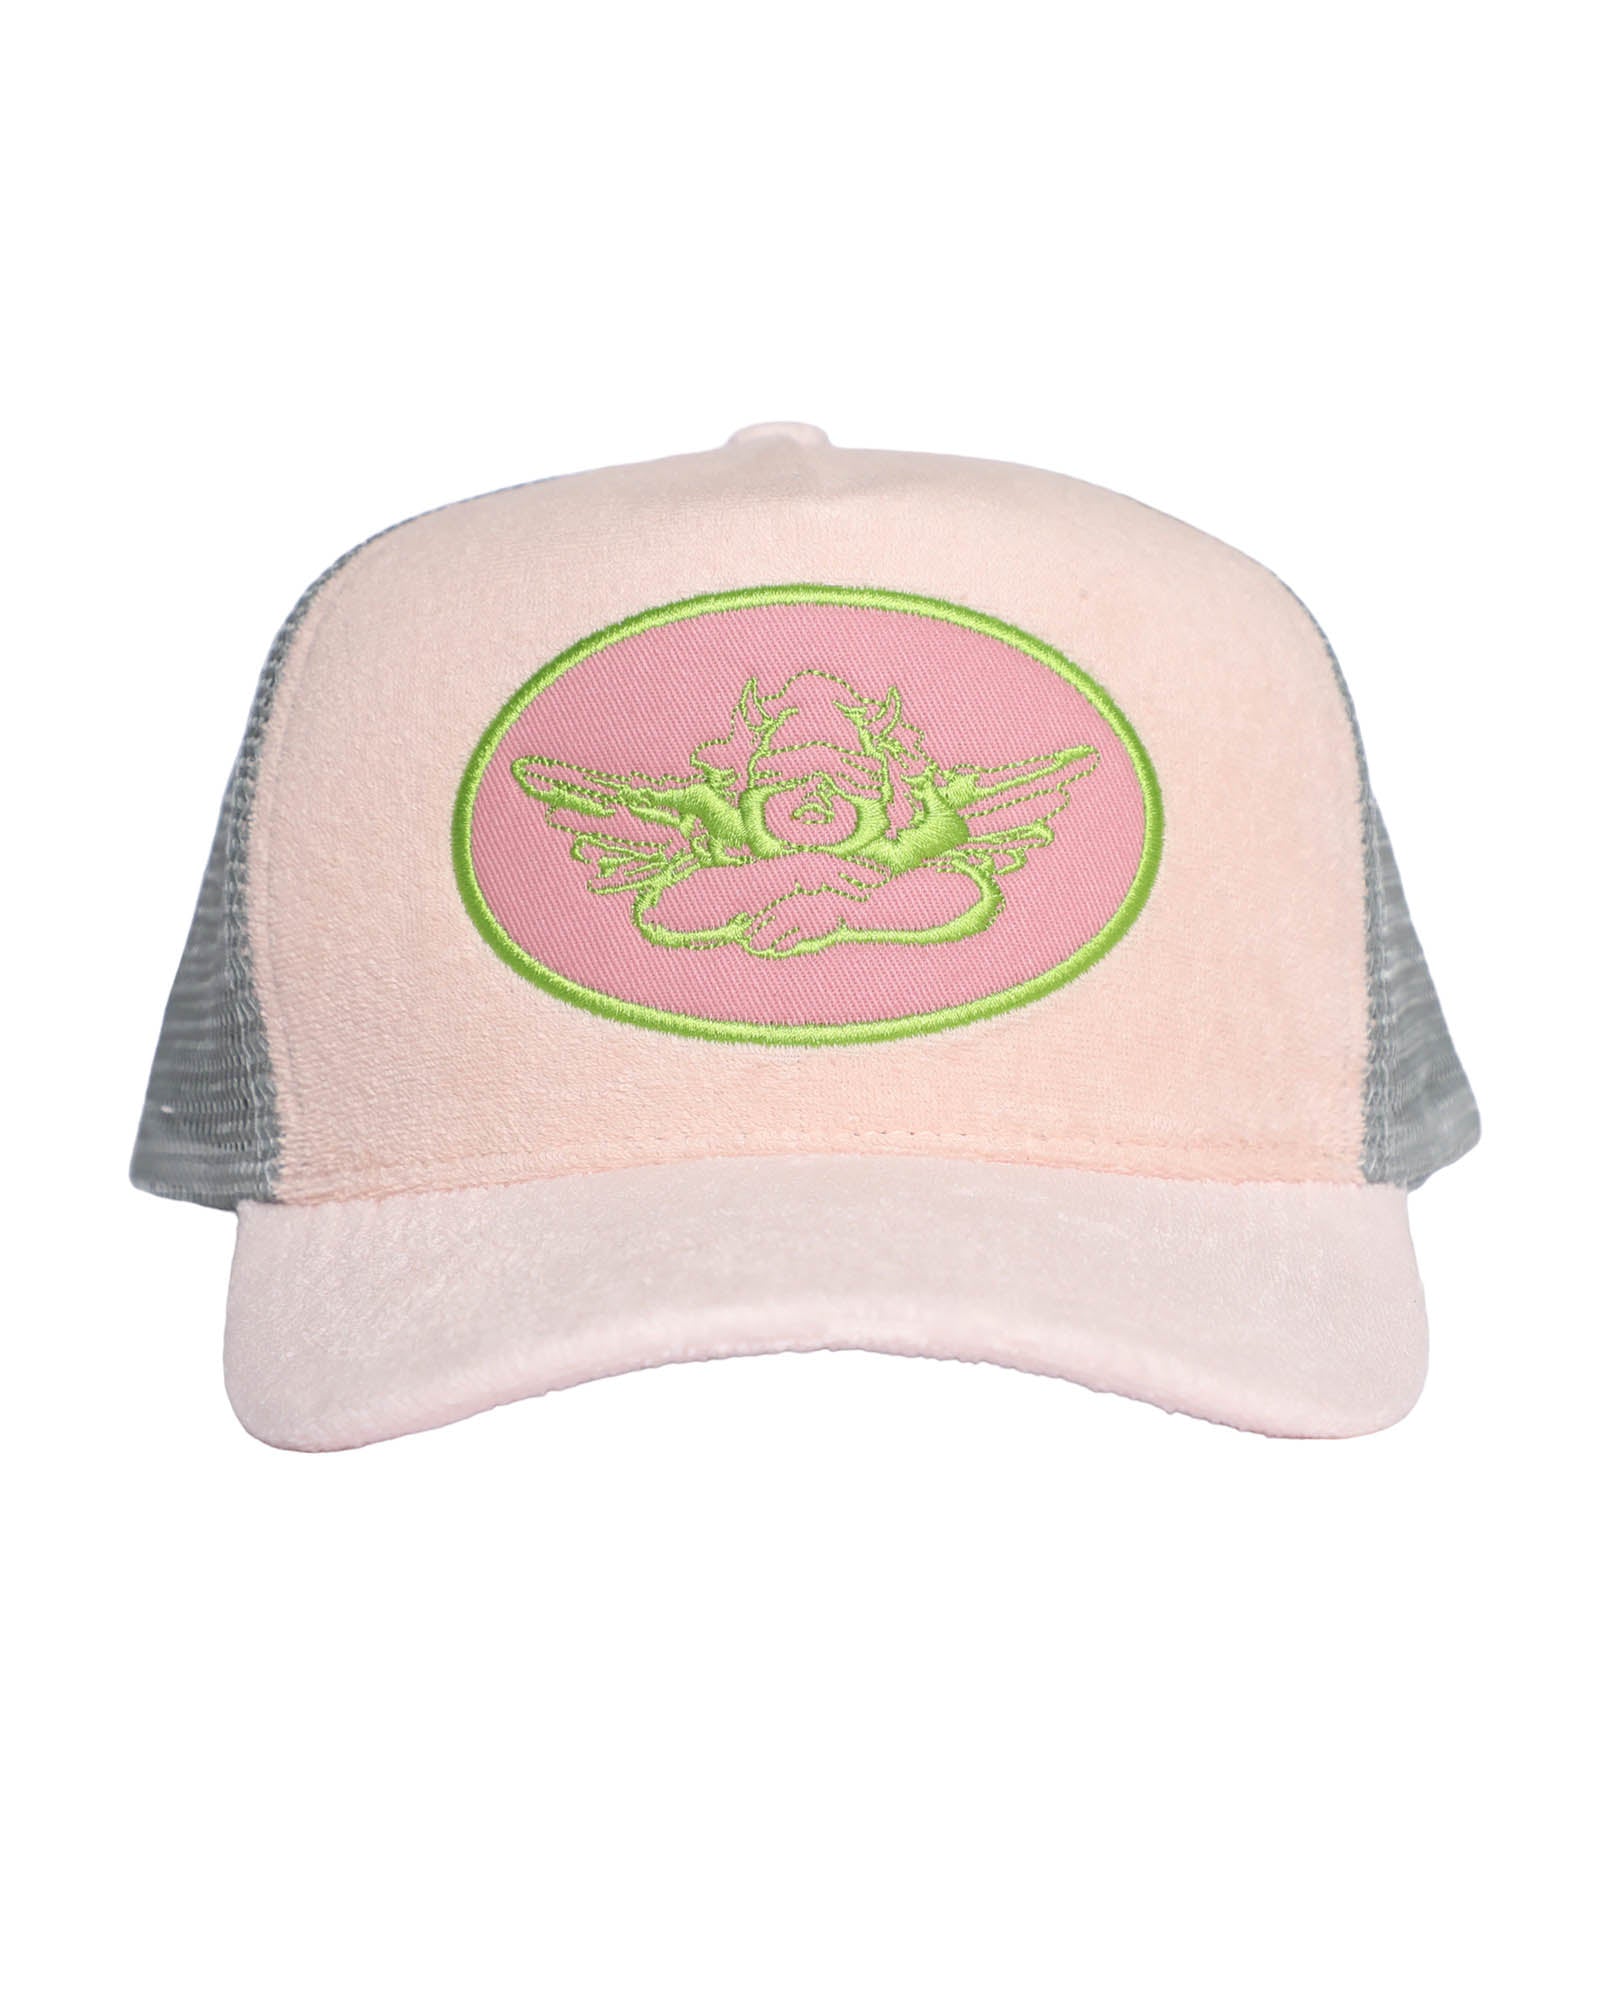 Cancer Terry Trucker Hat